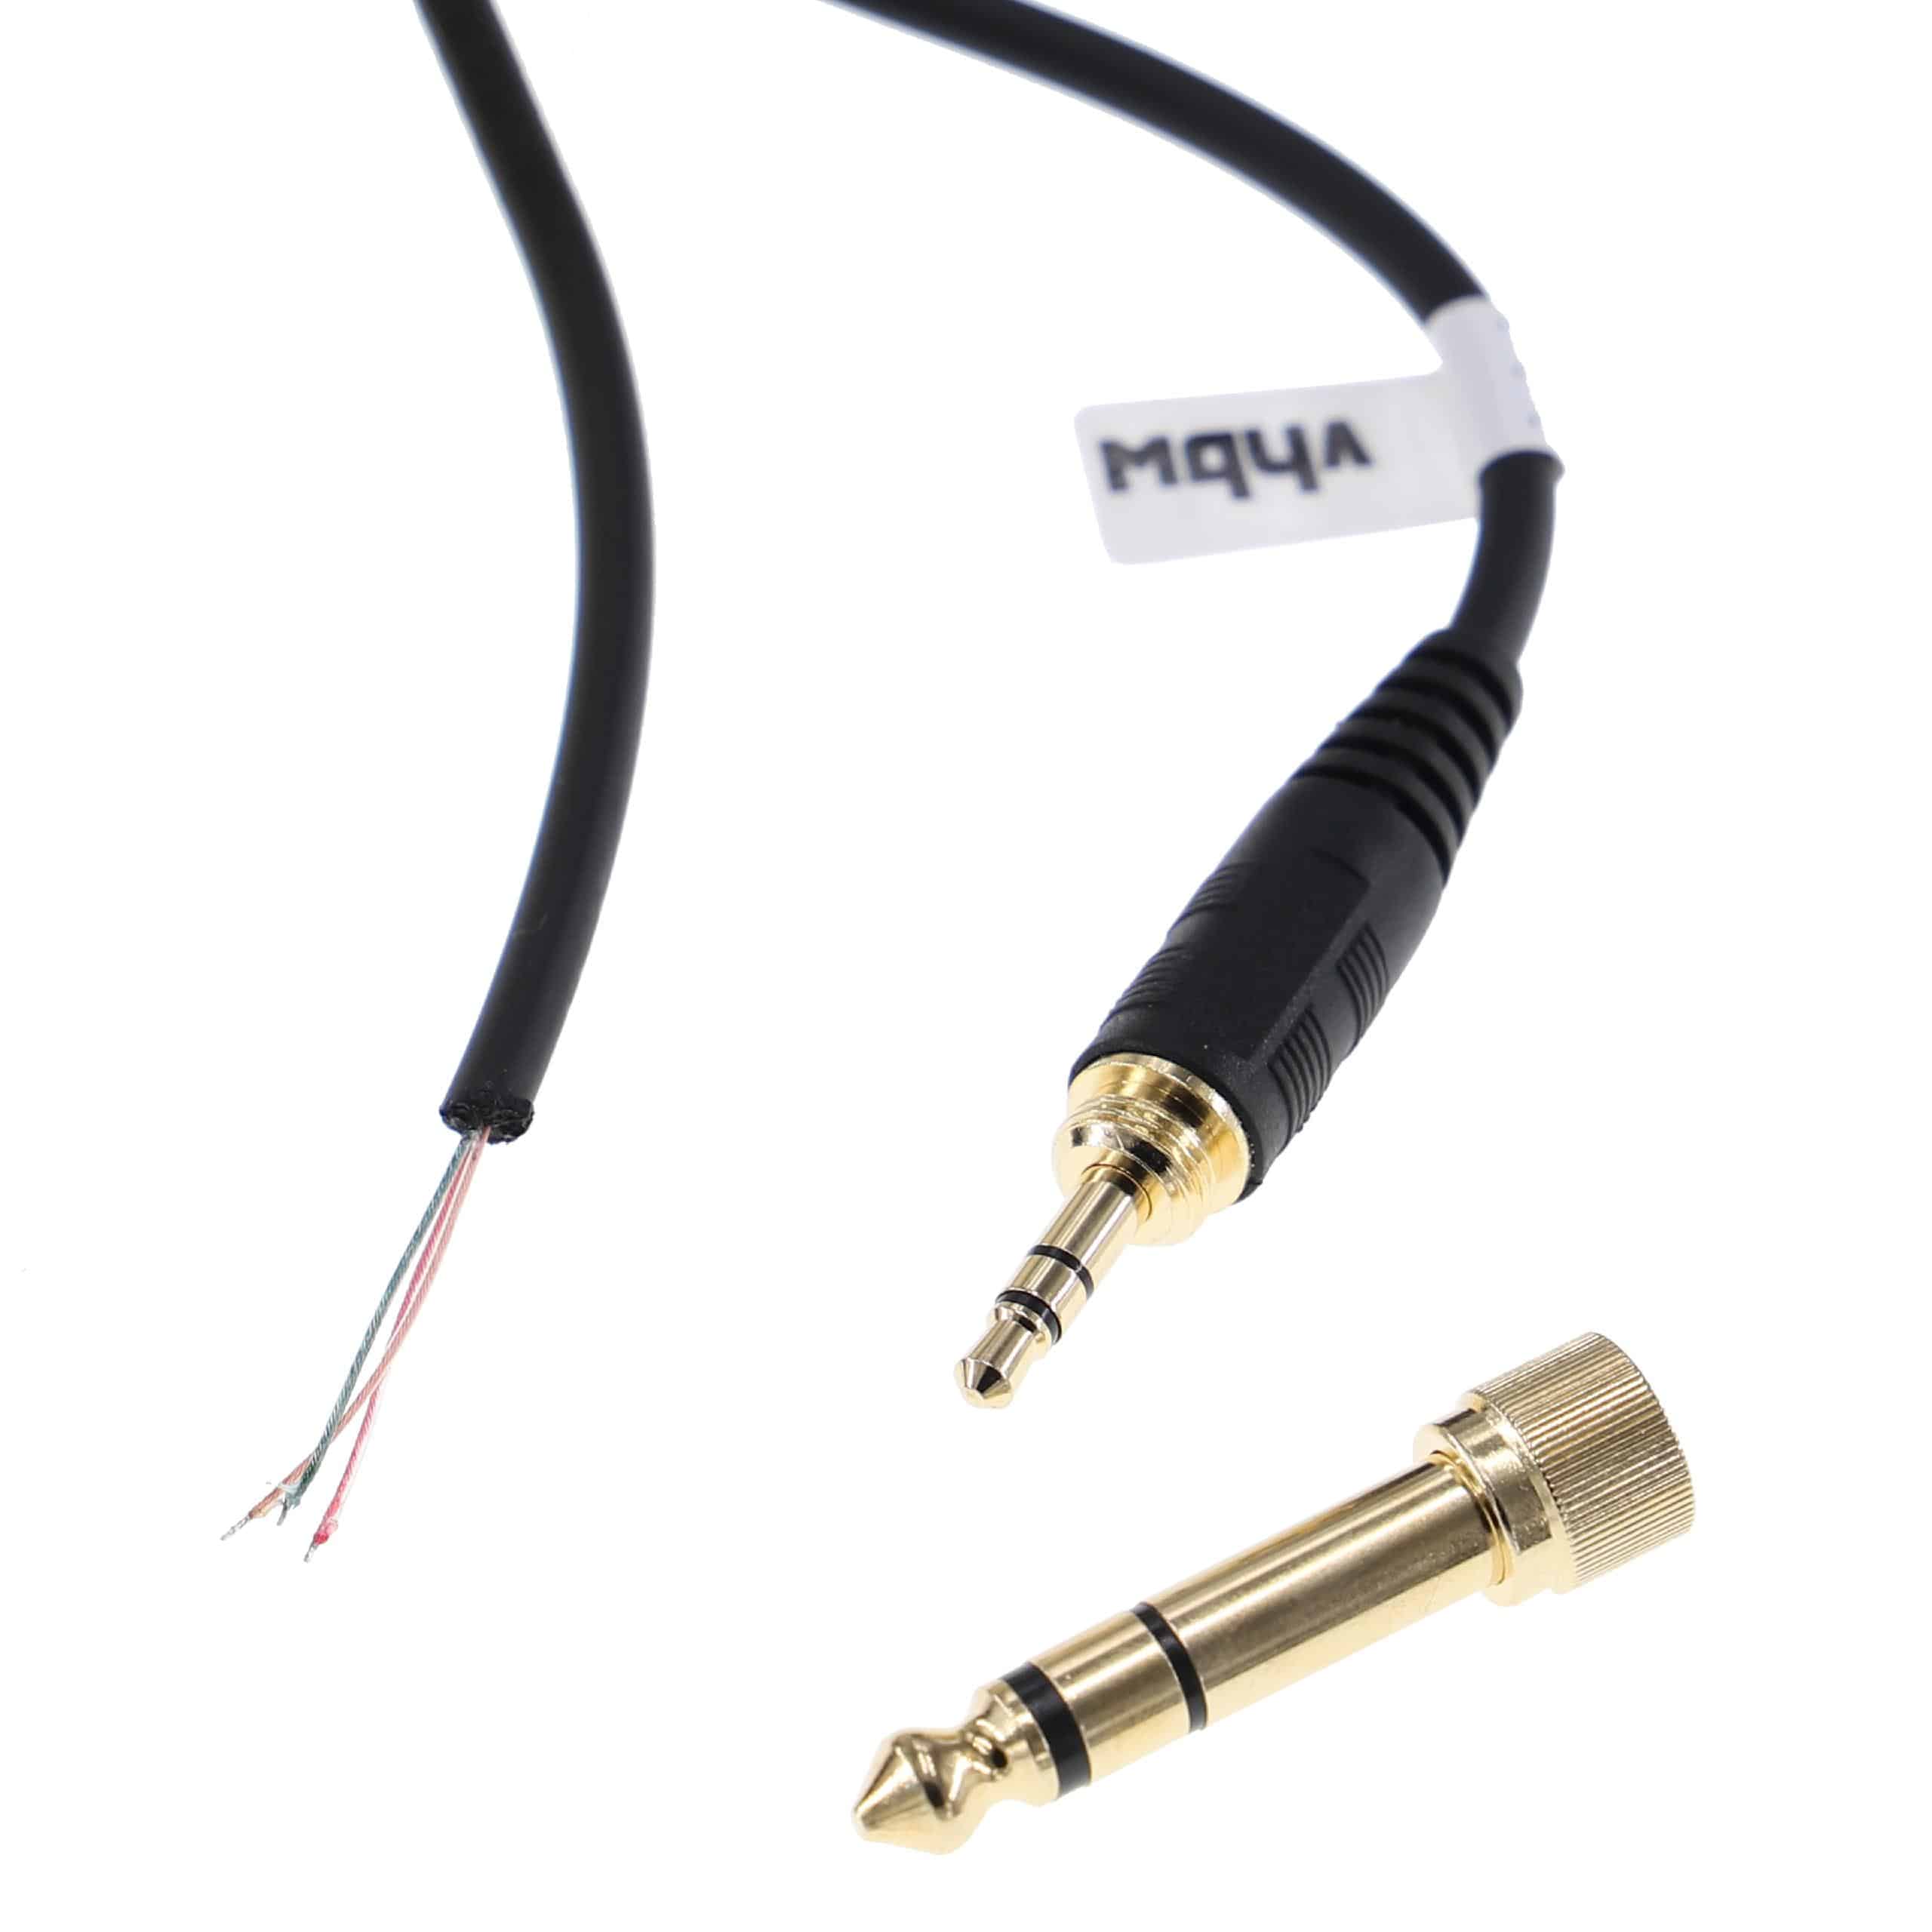 Kabel do słuchawek Beyerdynamic DT 770, DT 770 Pro, DT 990, DT 990 Pro - czarny, 100 - 300 cm